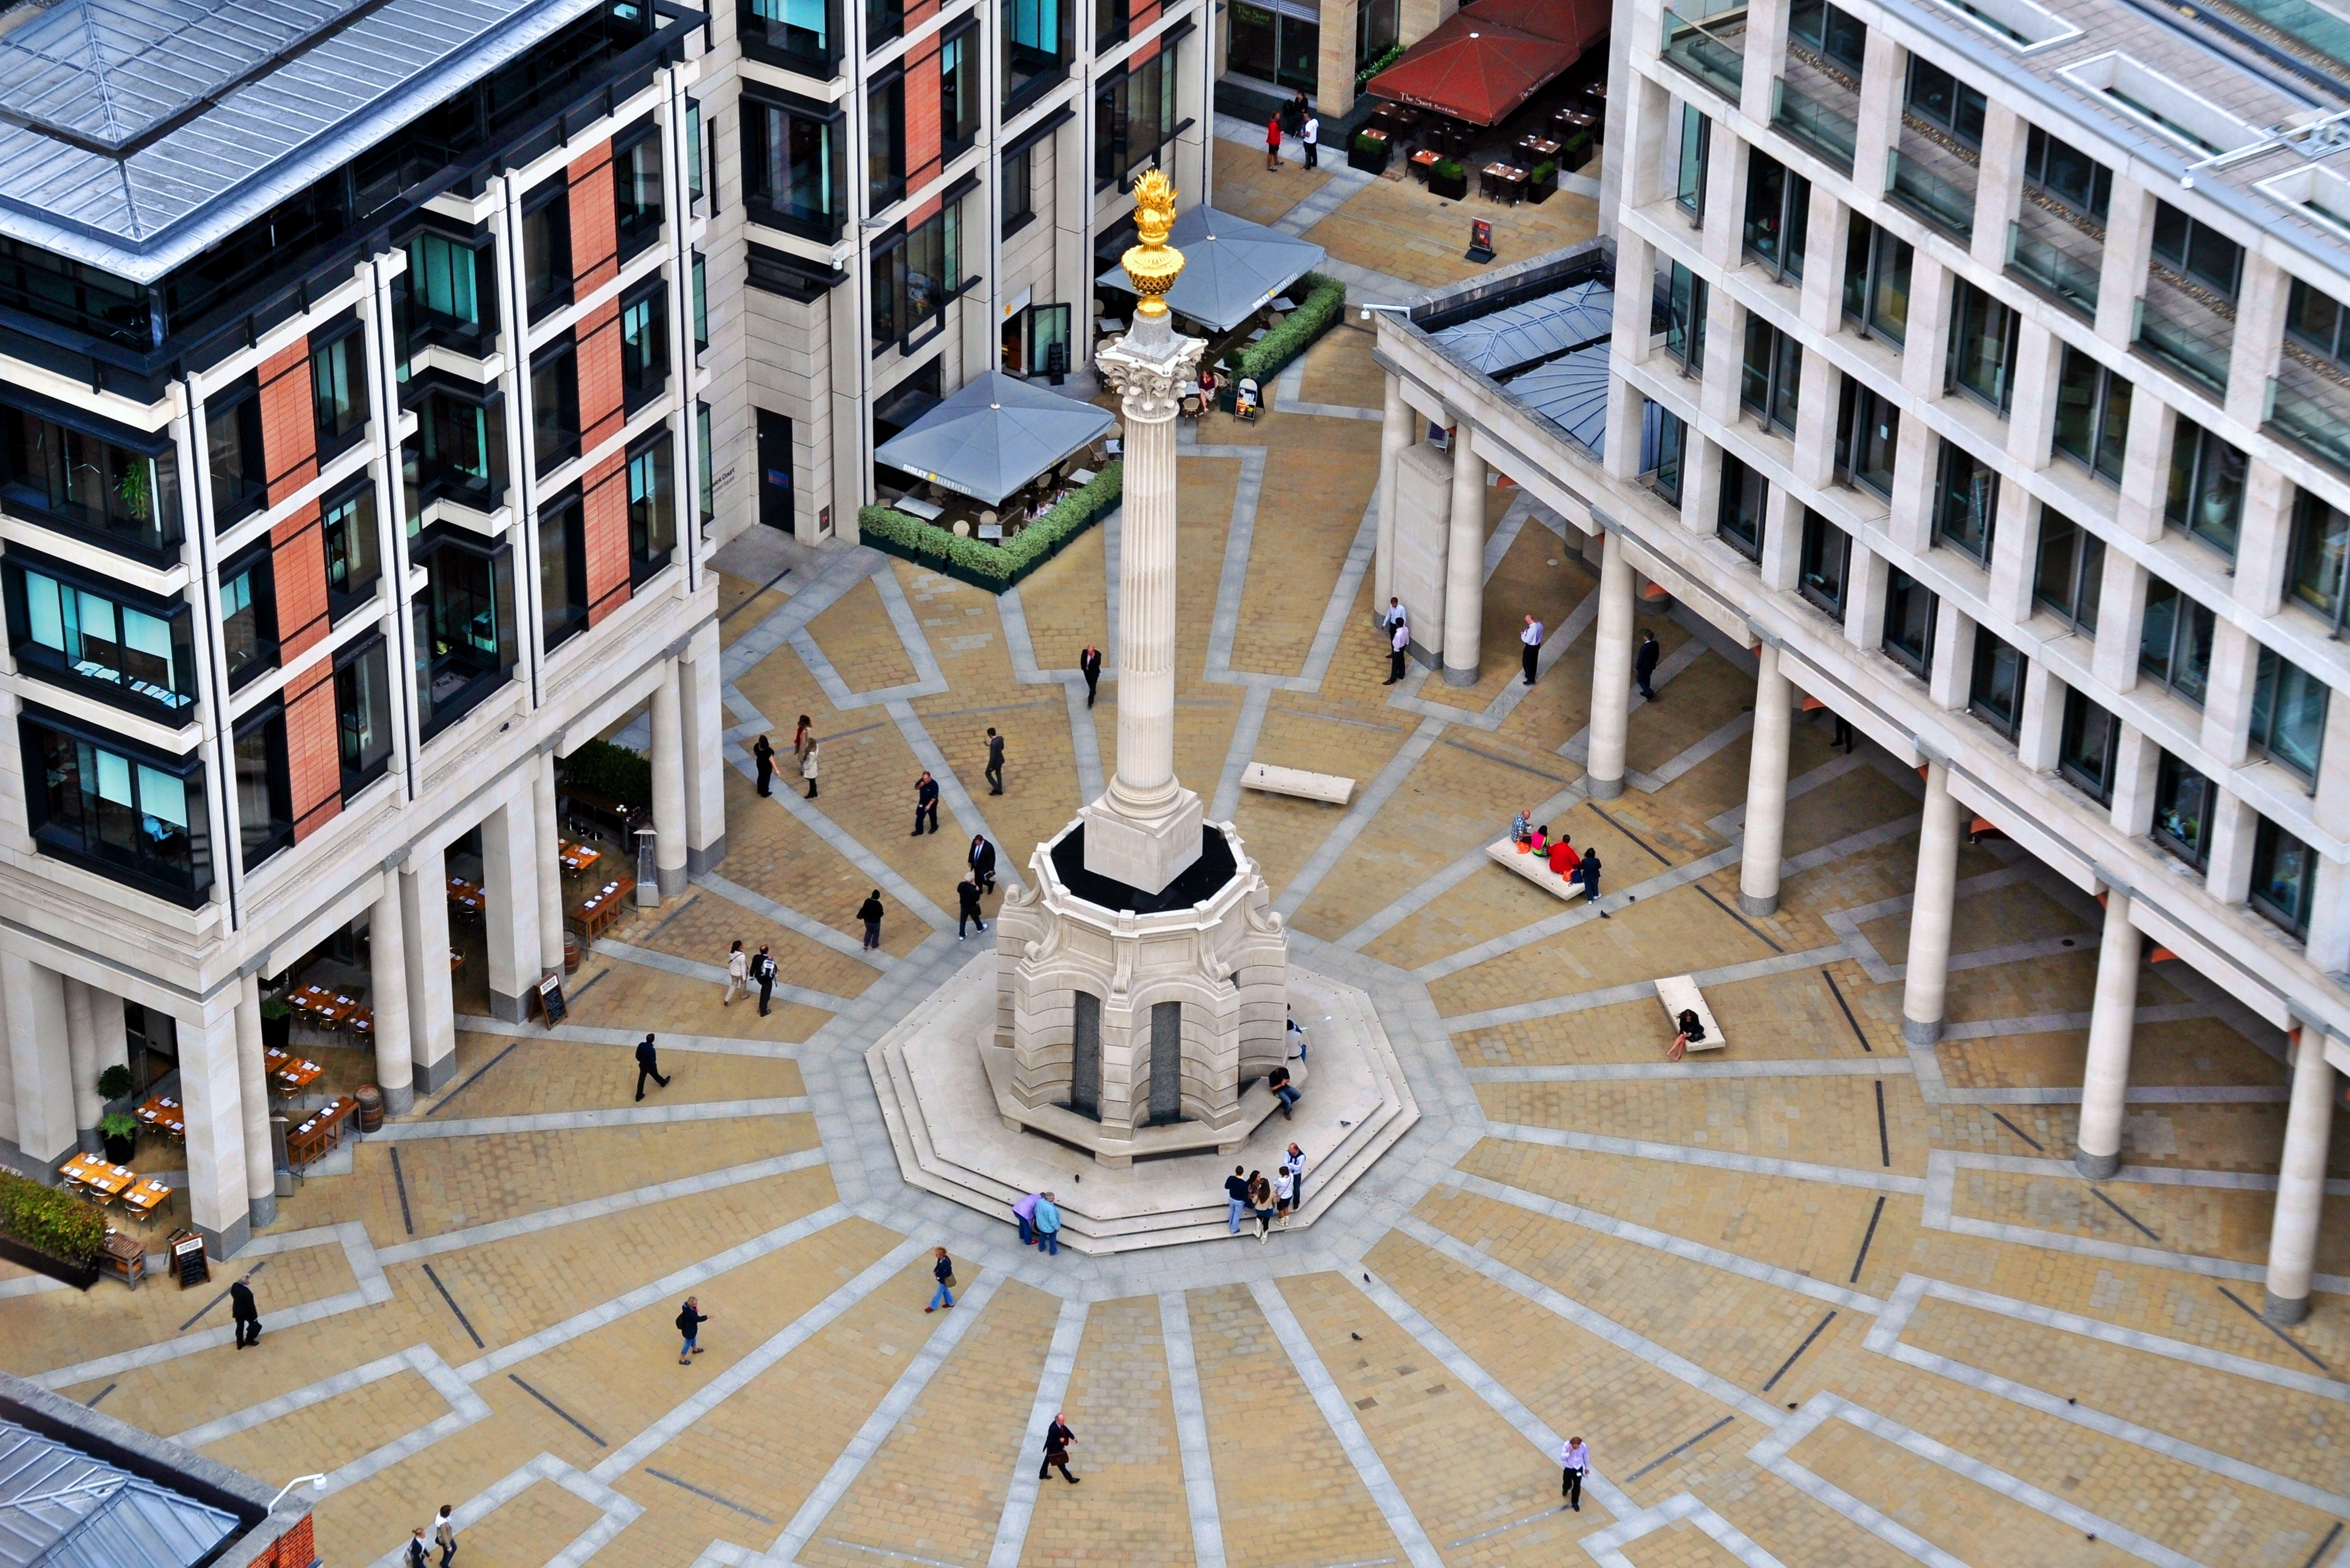 File:Paternoster Square, London.jpg - Wikimedia Commons